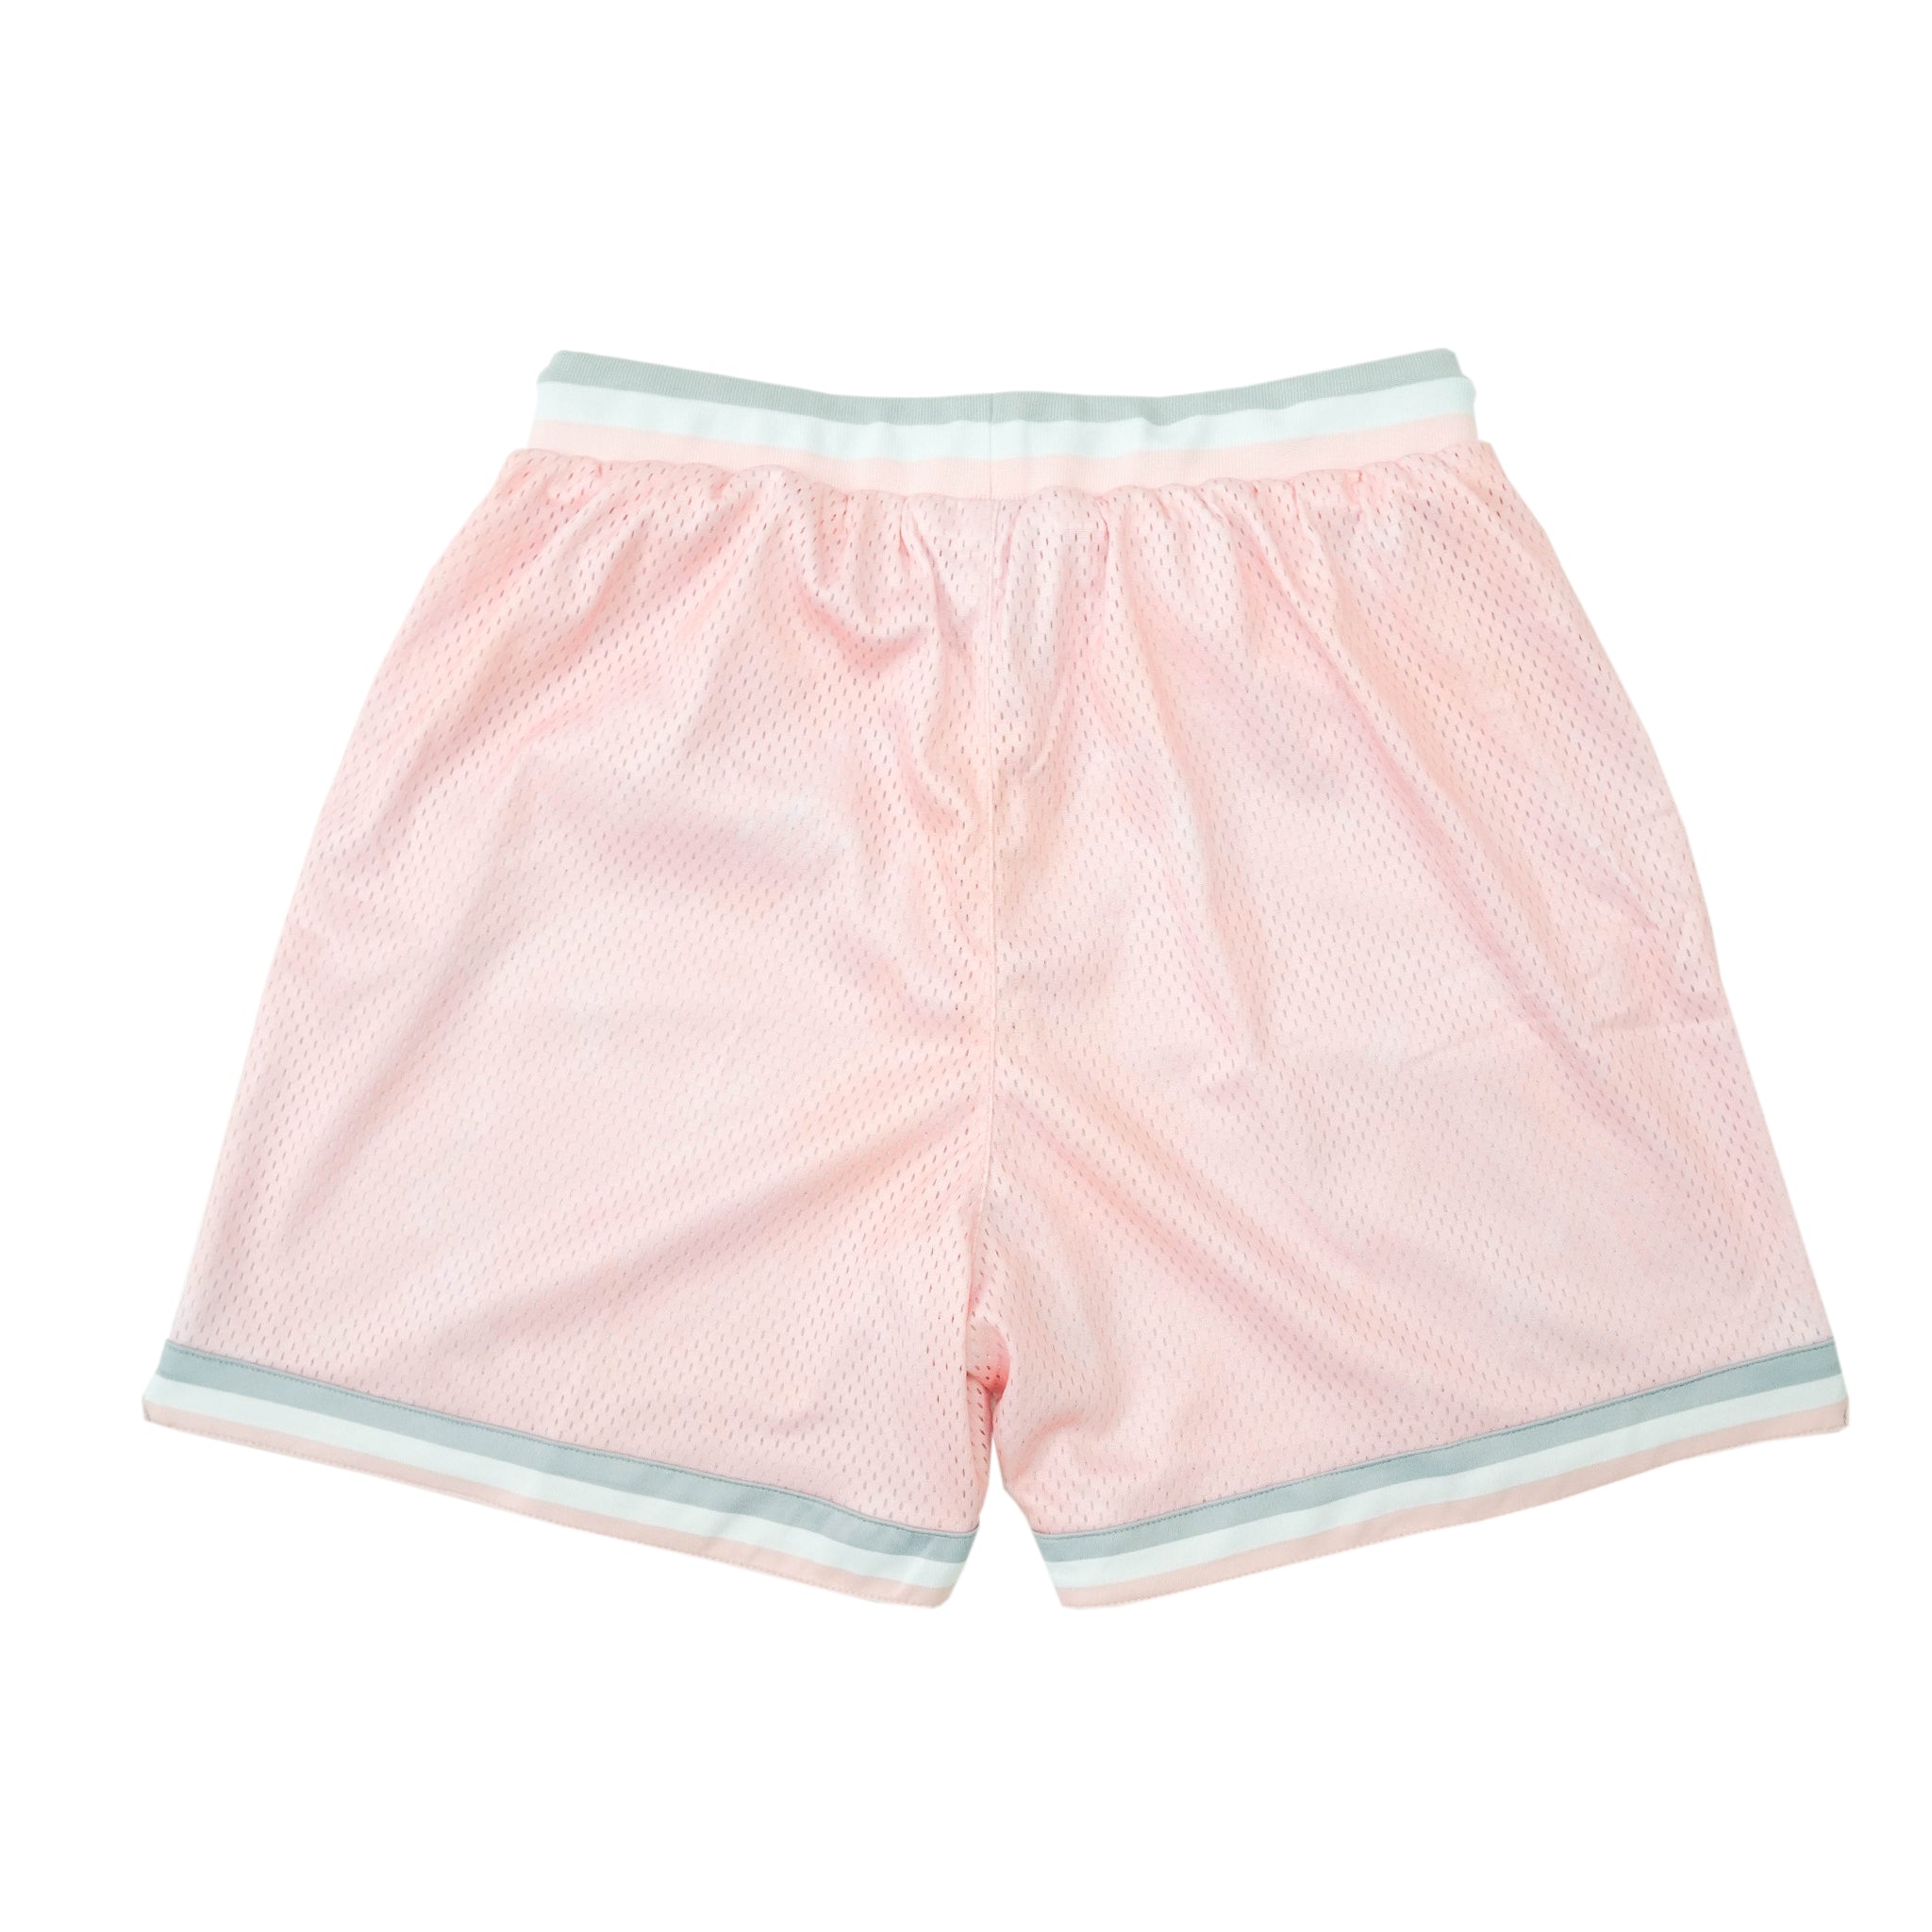 The perfect summer shorts rotation #mensfashion #fashion #kinetickings